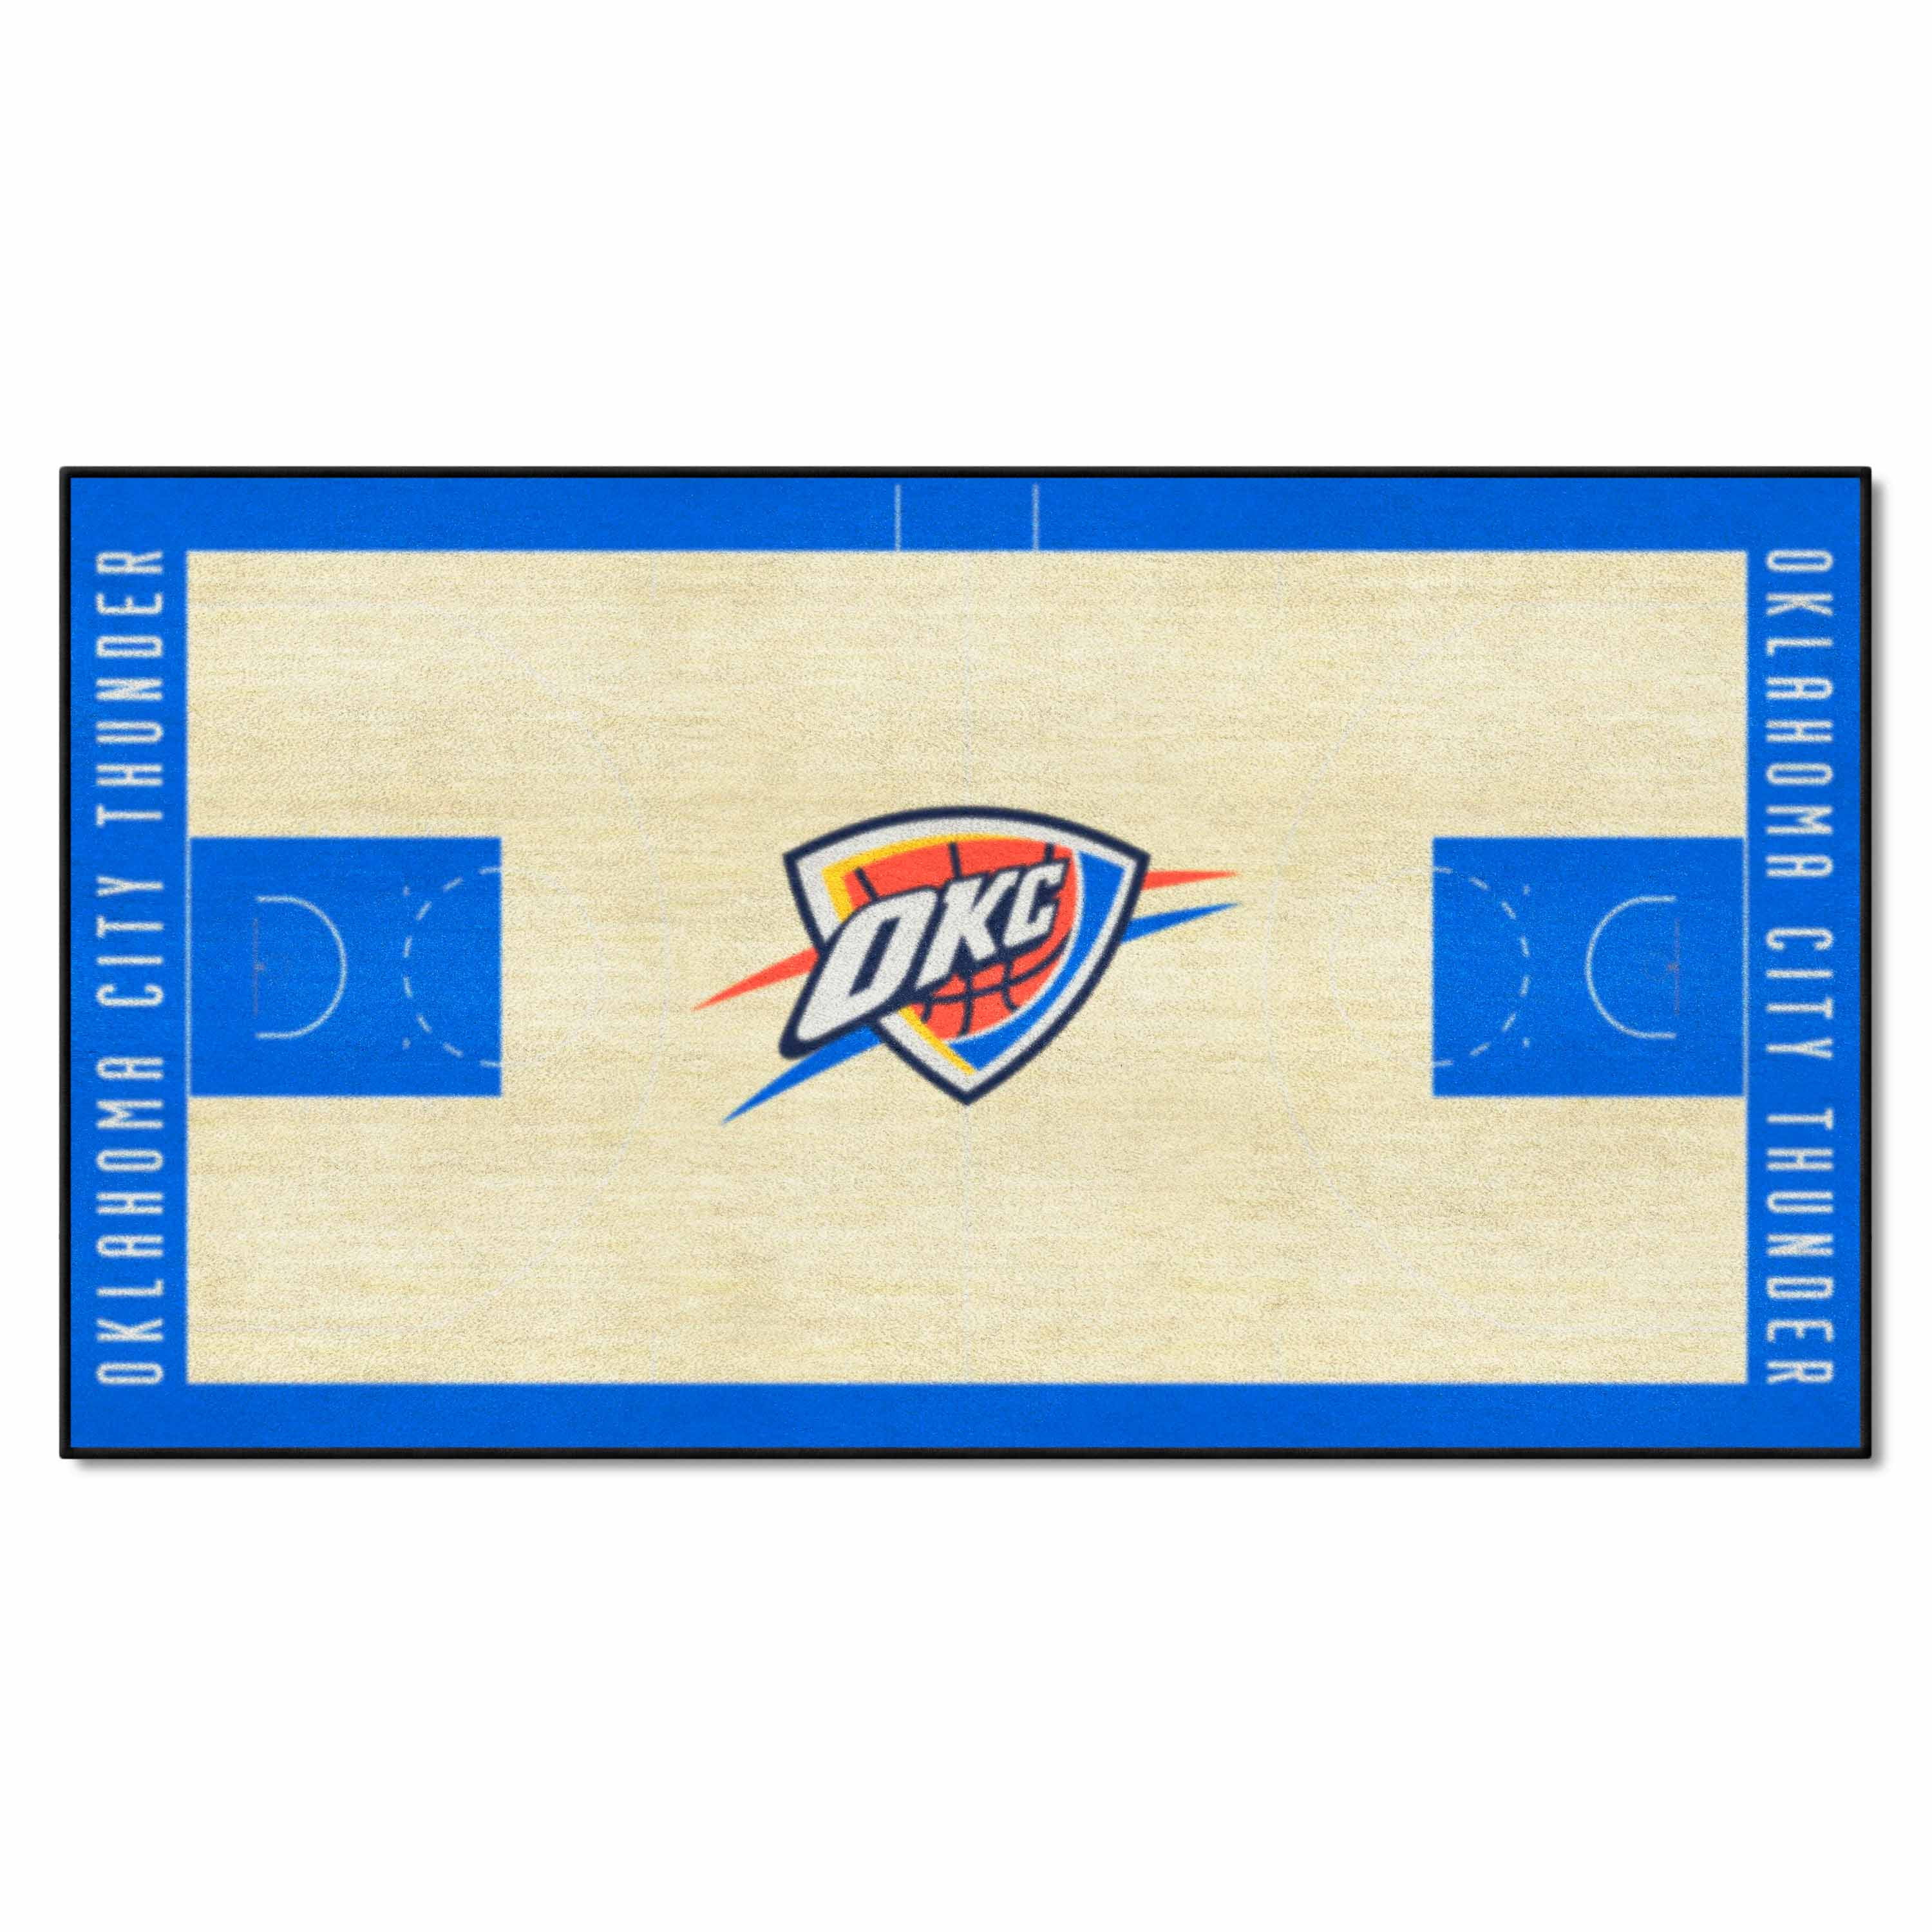 NBA - New York Knicks Large Court Runner 29.5x54 